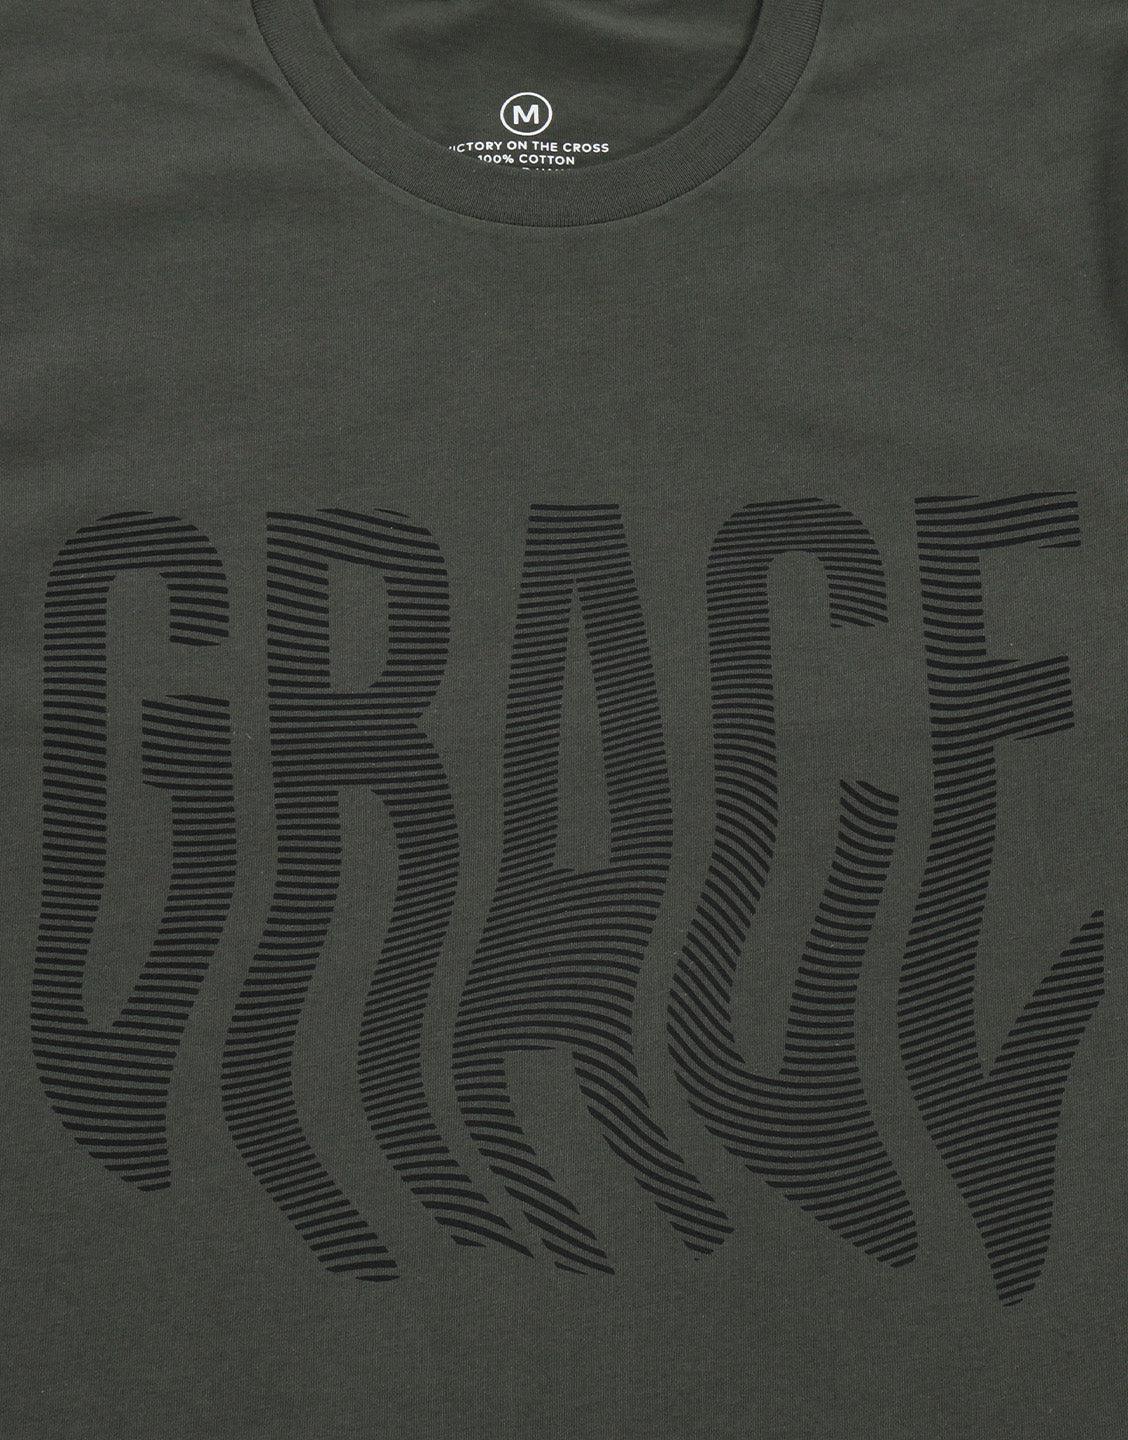 Grace T-Shirt (Army Green) - VOTC Clothing